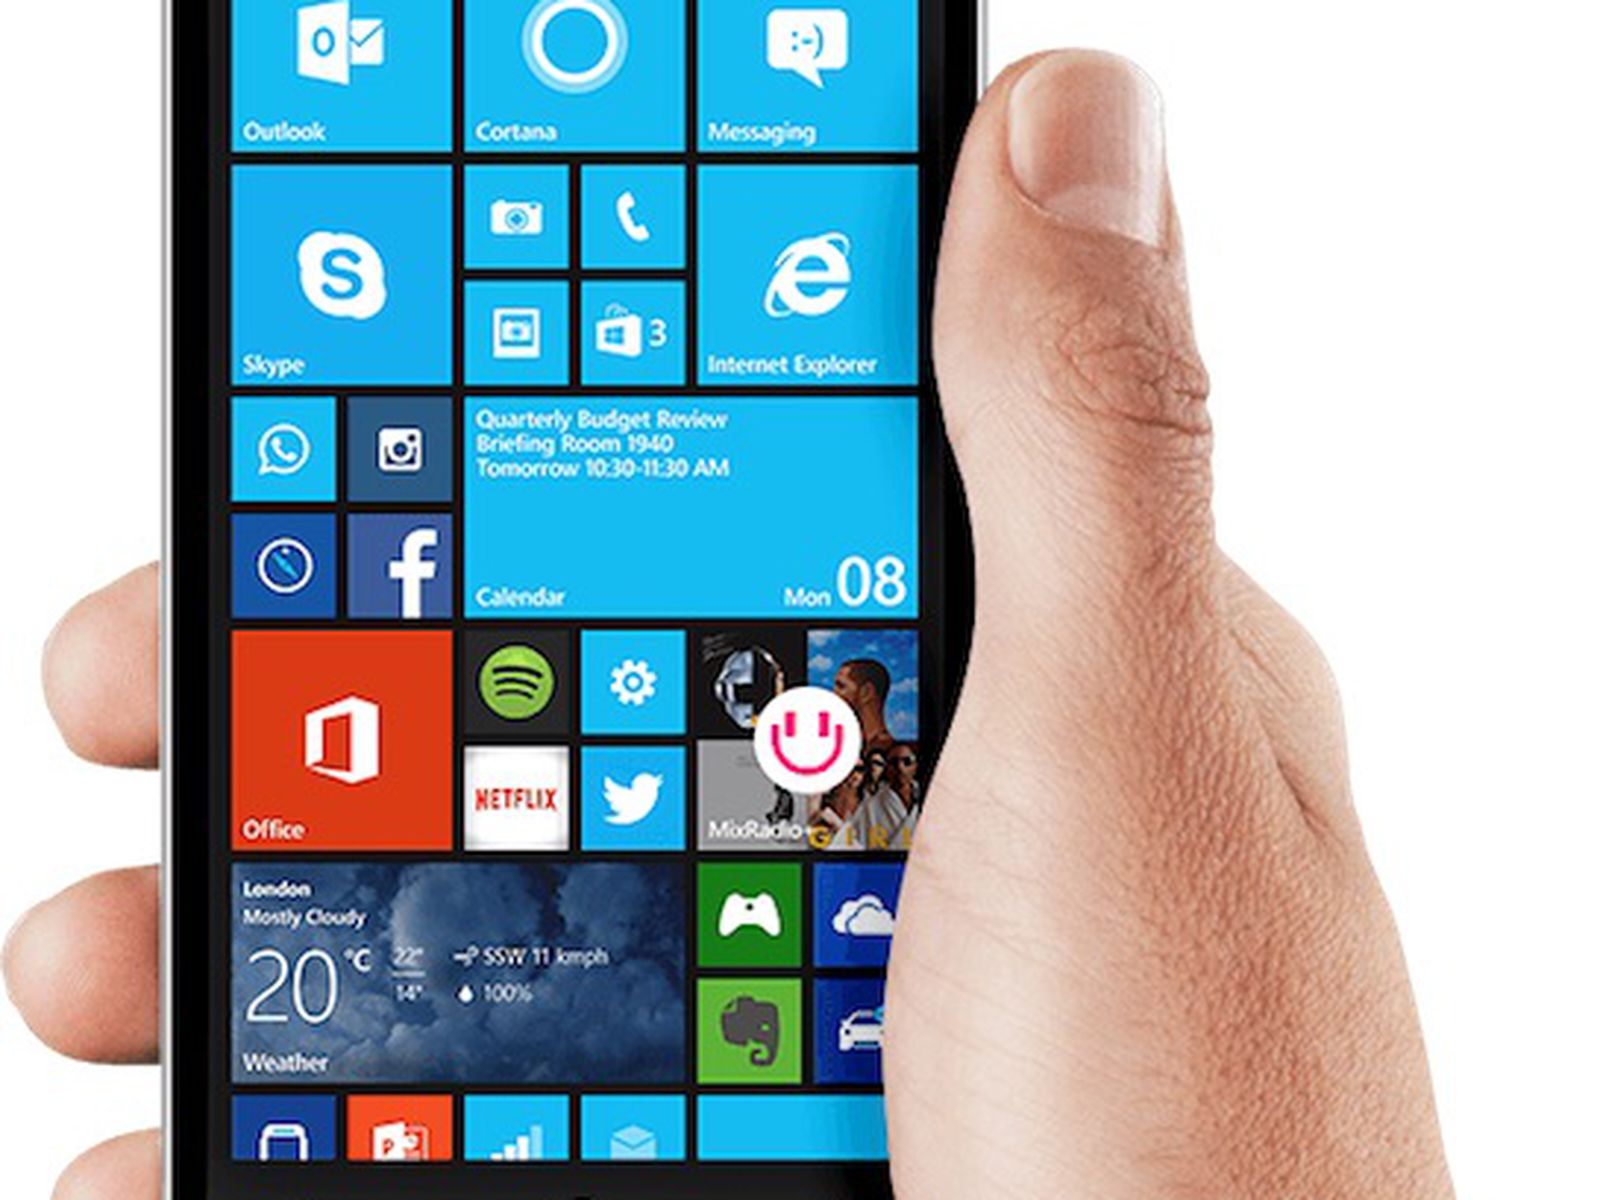 Windows phone 8 live chat